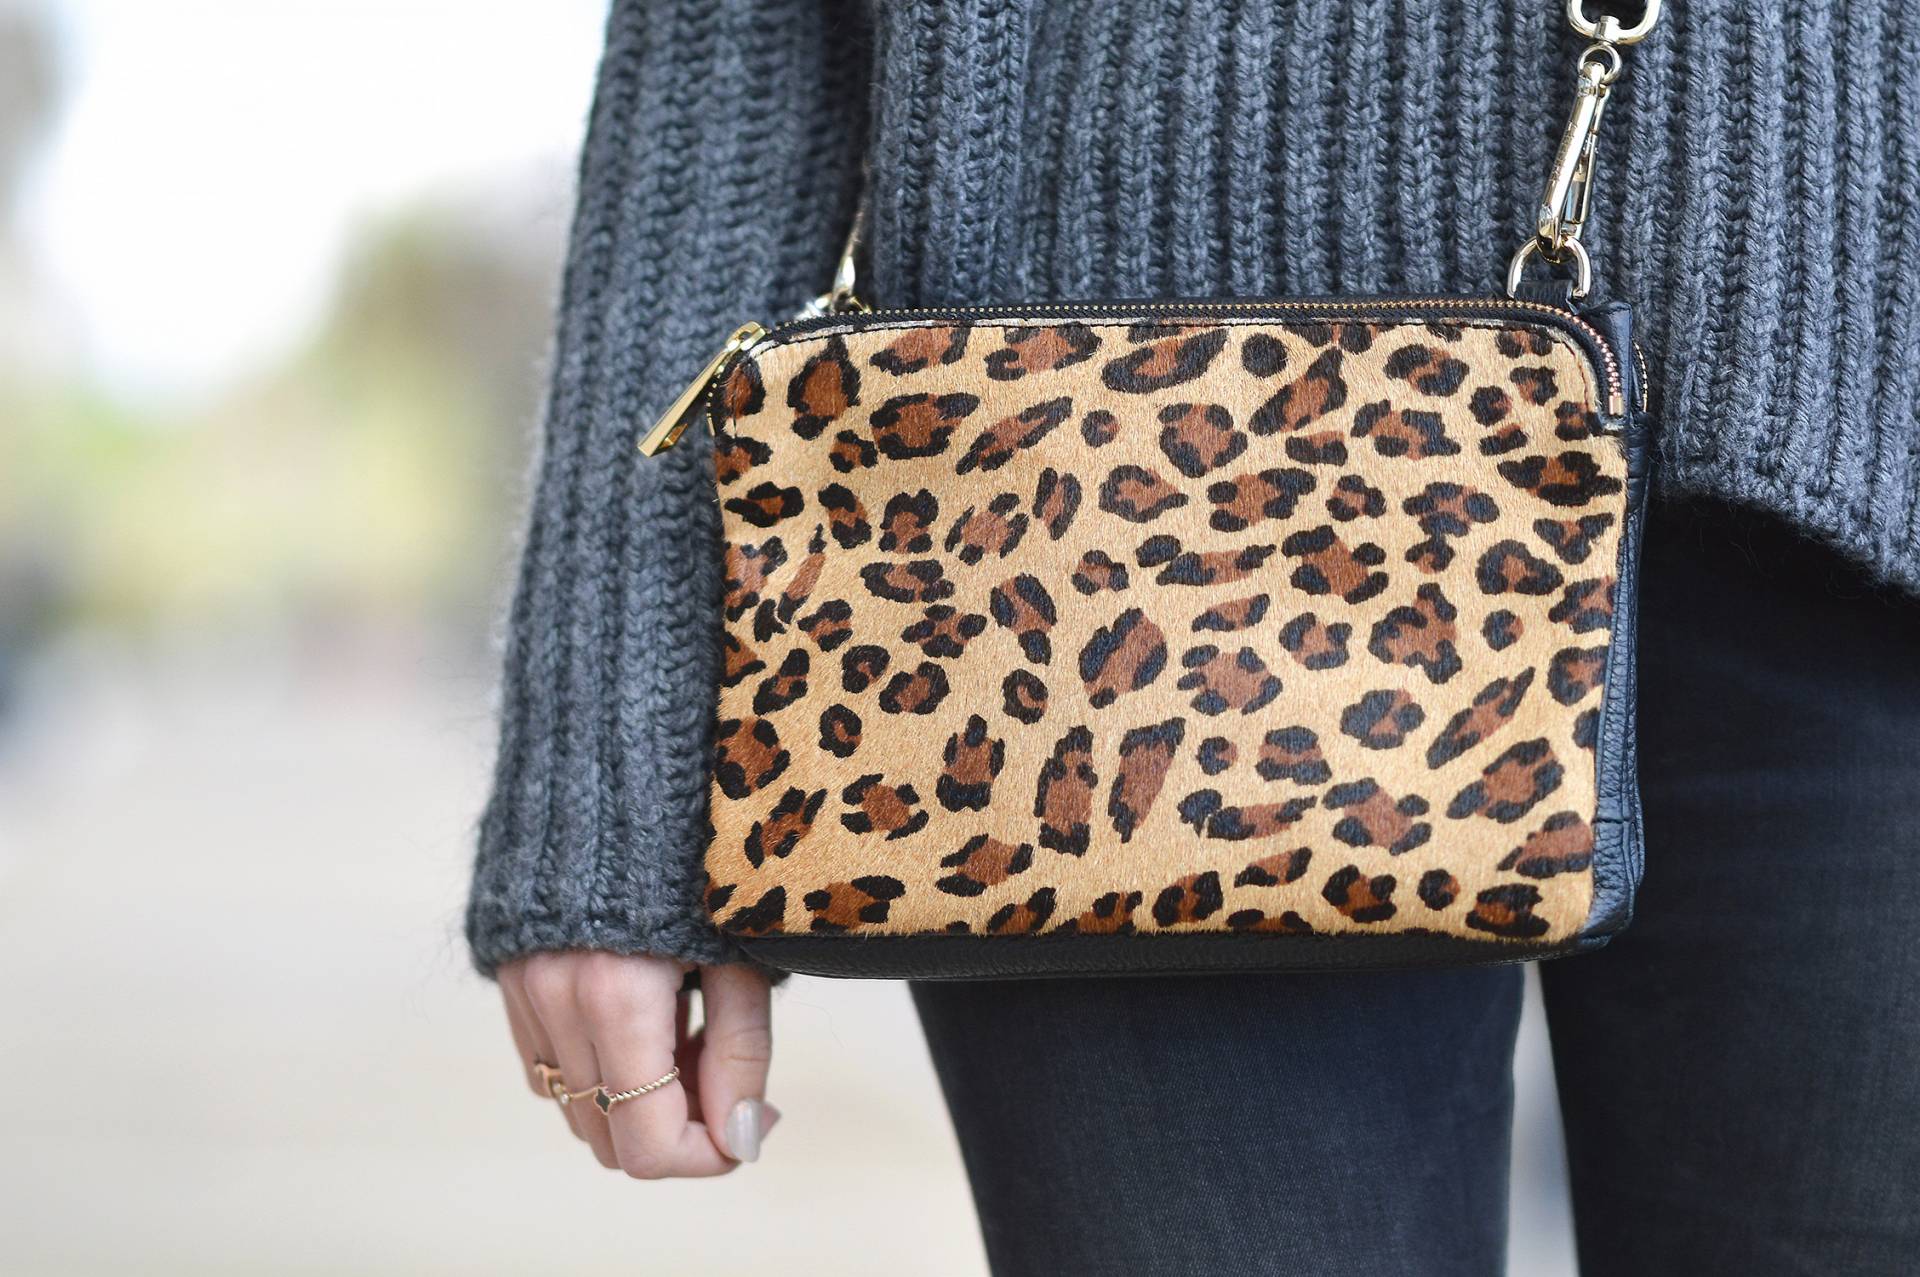 sac leopard tendance 2016